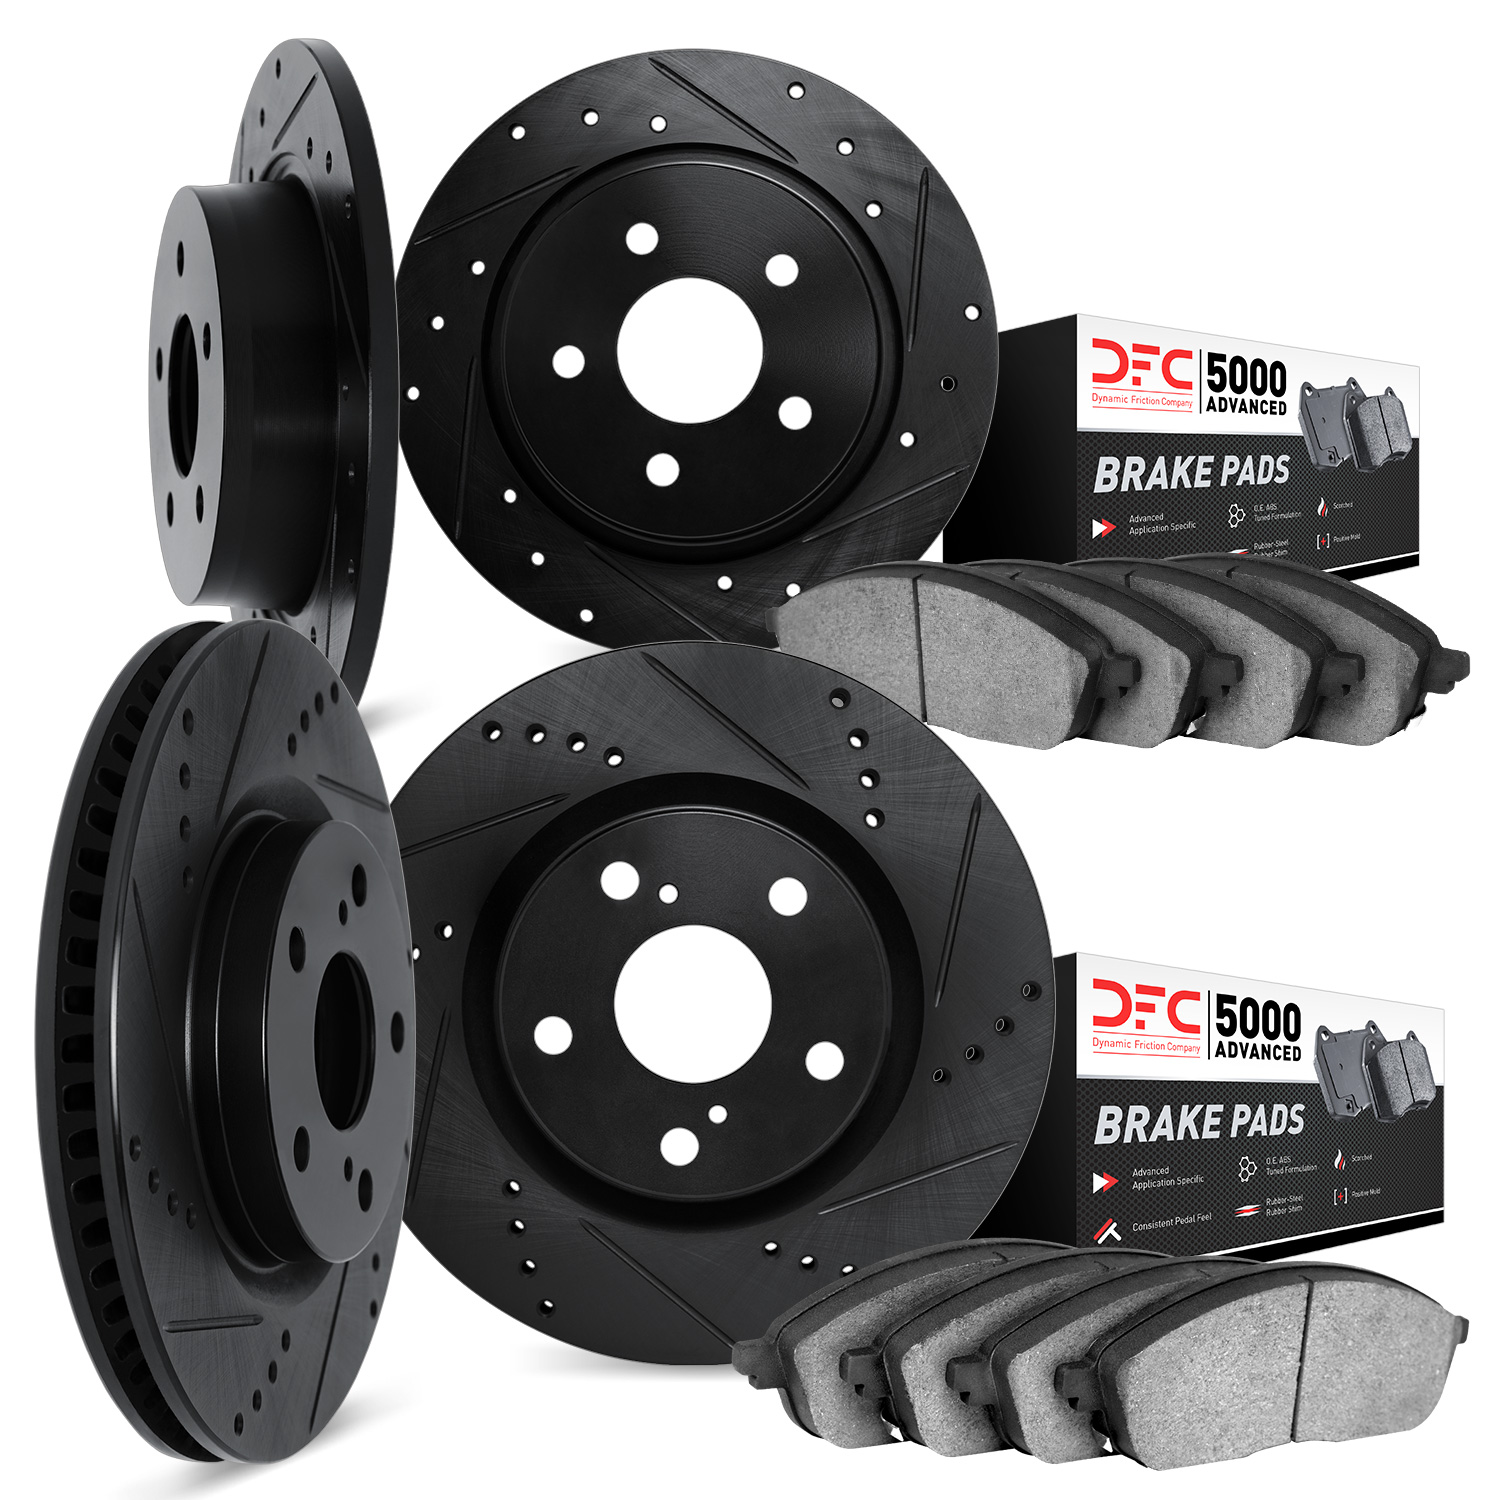 8504-54298 Drilled/Slotted Brake Rotors w/5000 Advanced Brake Pads Kit [Black], 2015-2020 Ford/Lincoln/Mercury/Mazda, Position: